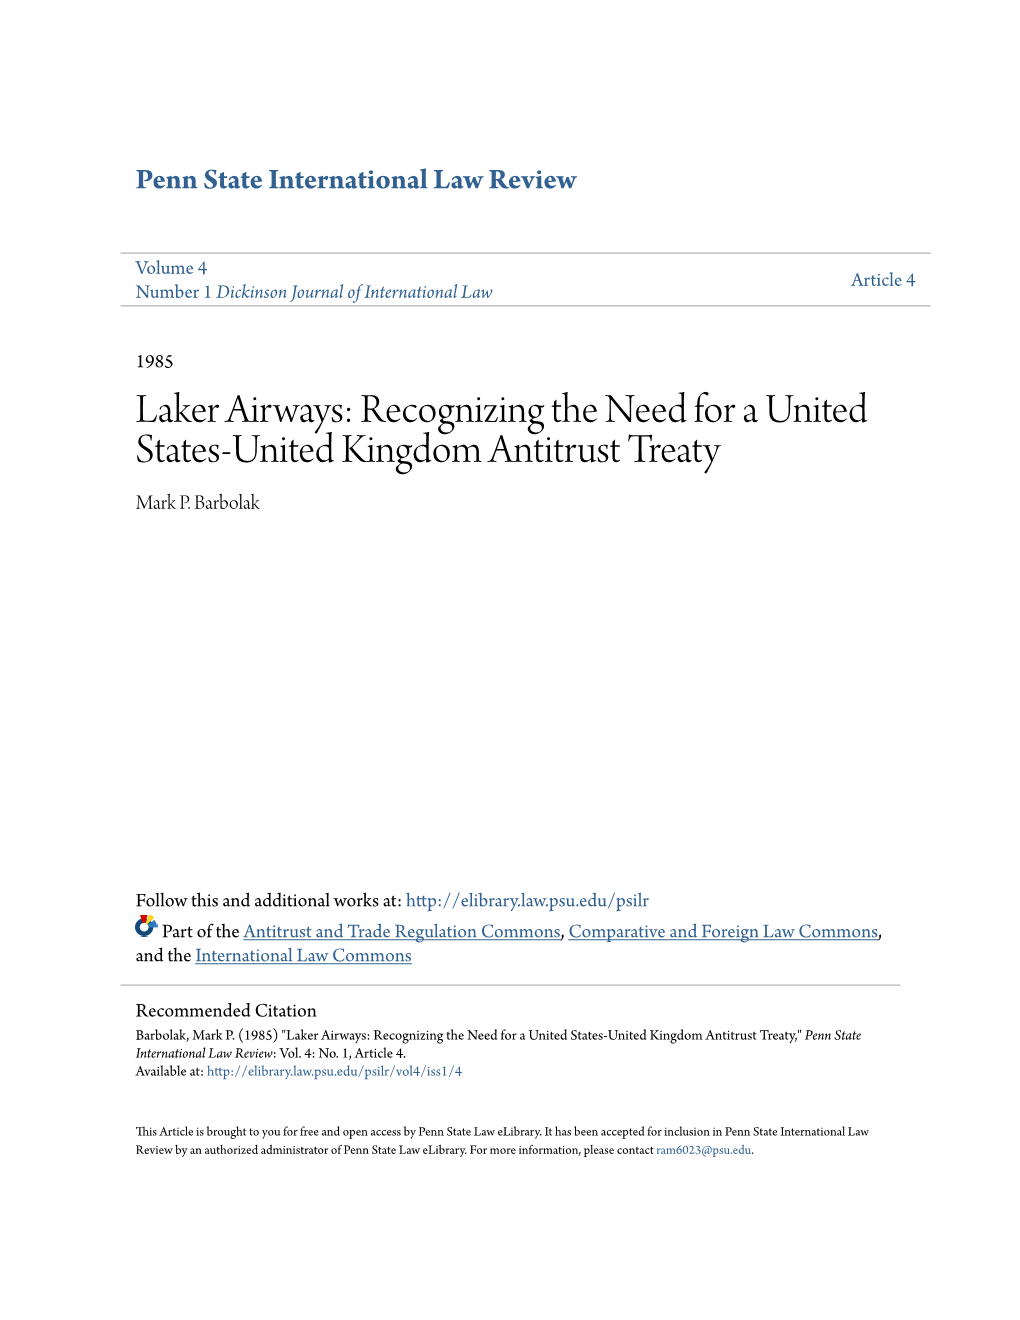 Laker Airways: Recognizing the Need for a United States-United Kingdom Antitrust Treaty Mark P